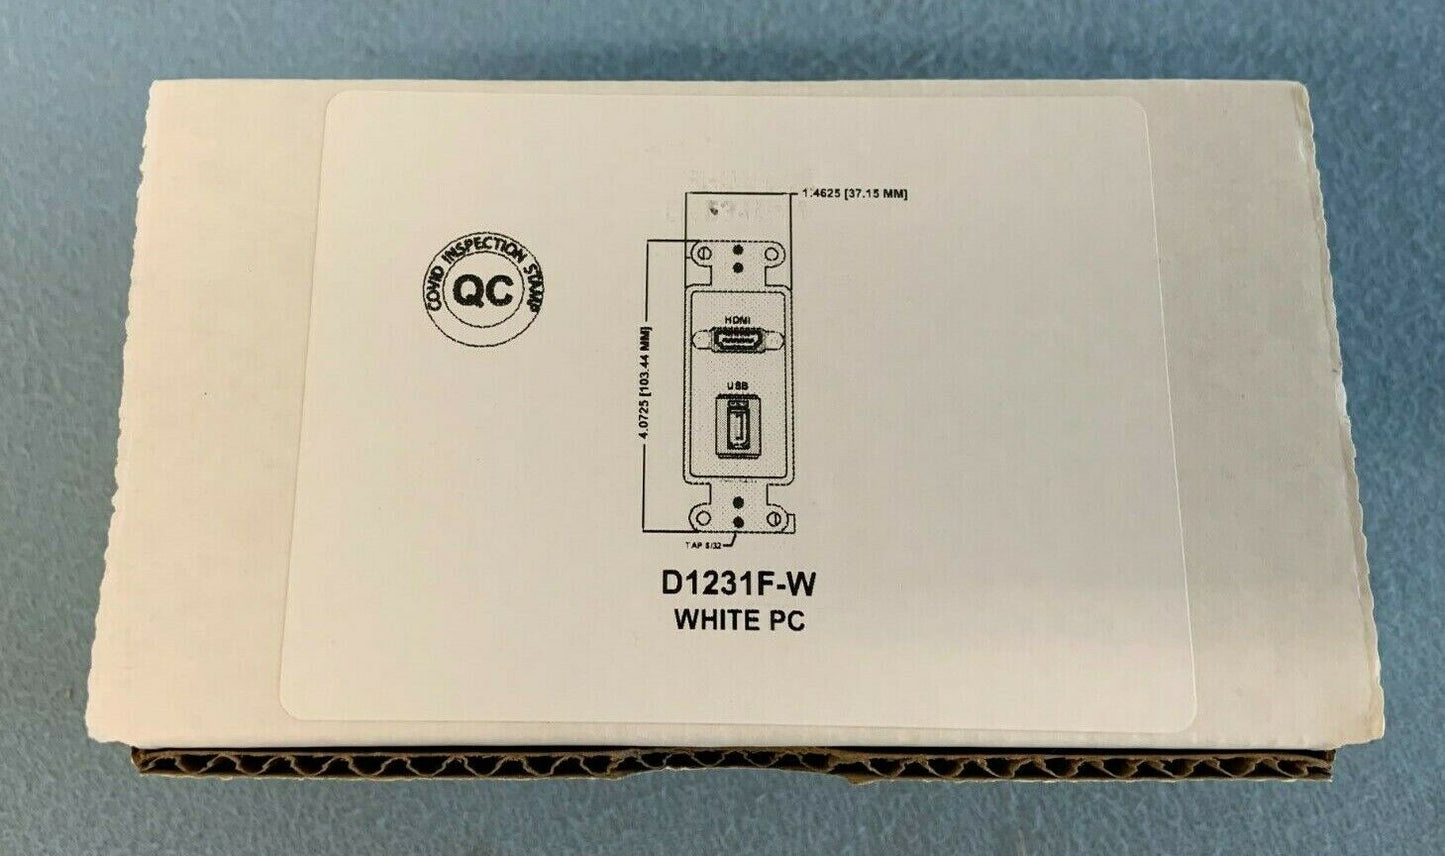 Lot of 9 - COVIDAV Decora HDMI Female, Keystone USB-3-AA, White - D1231F-W